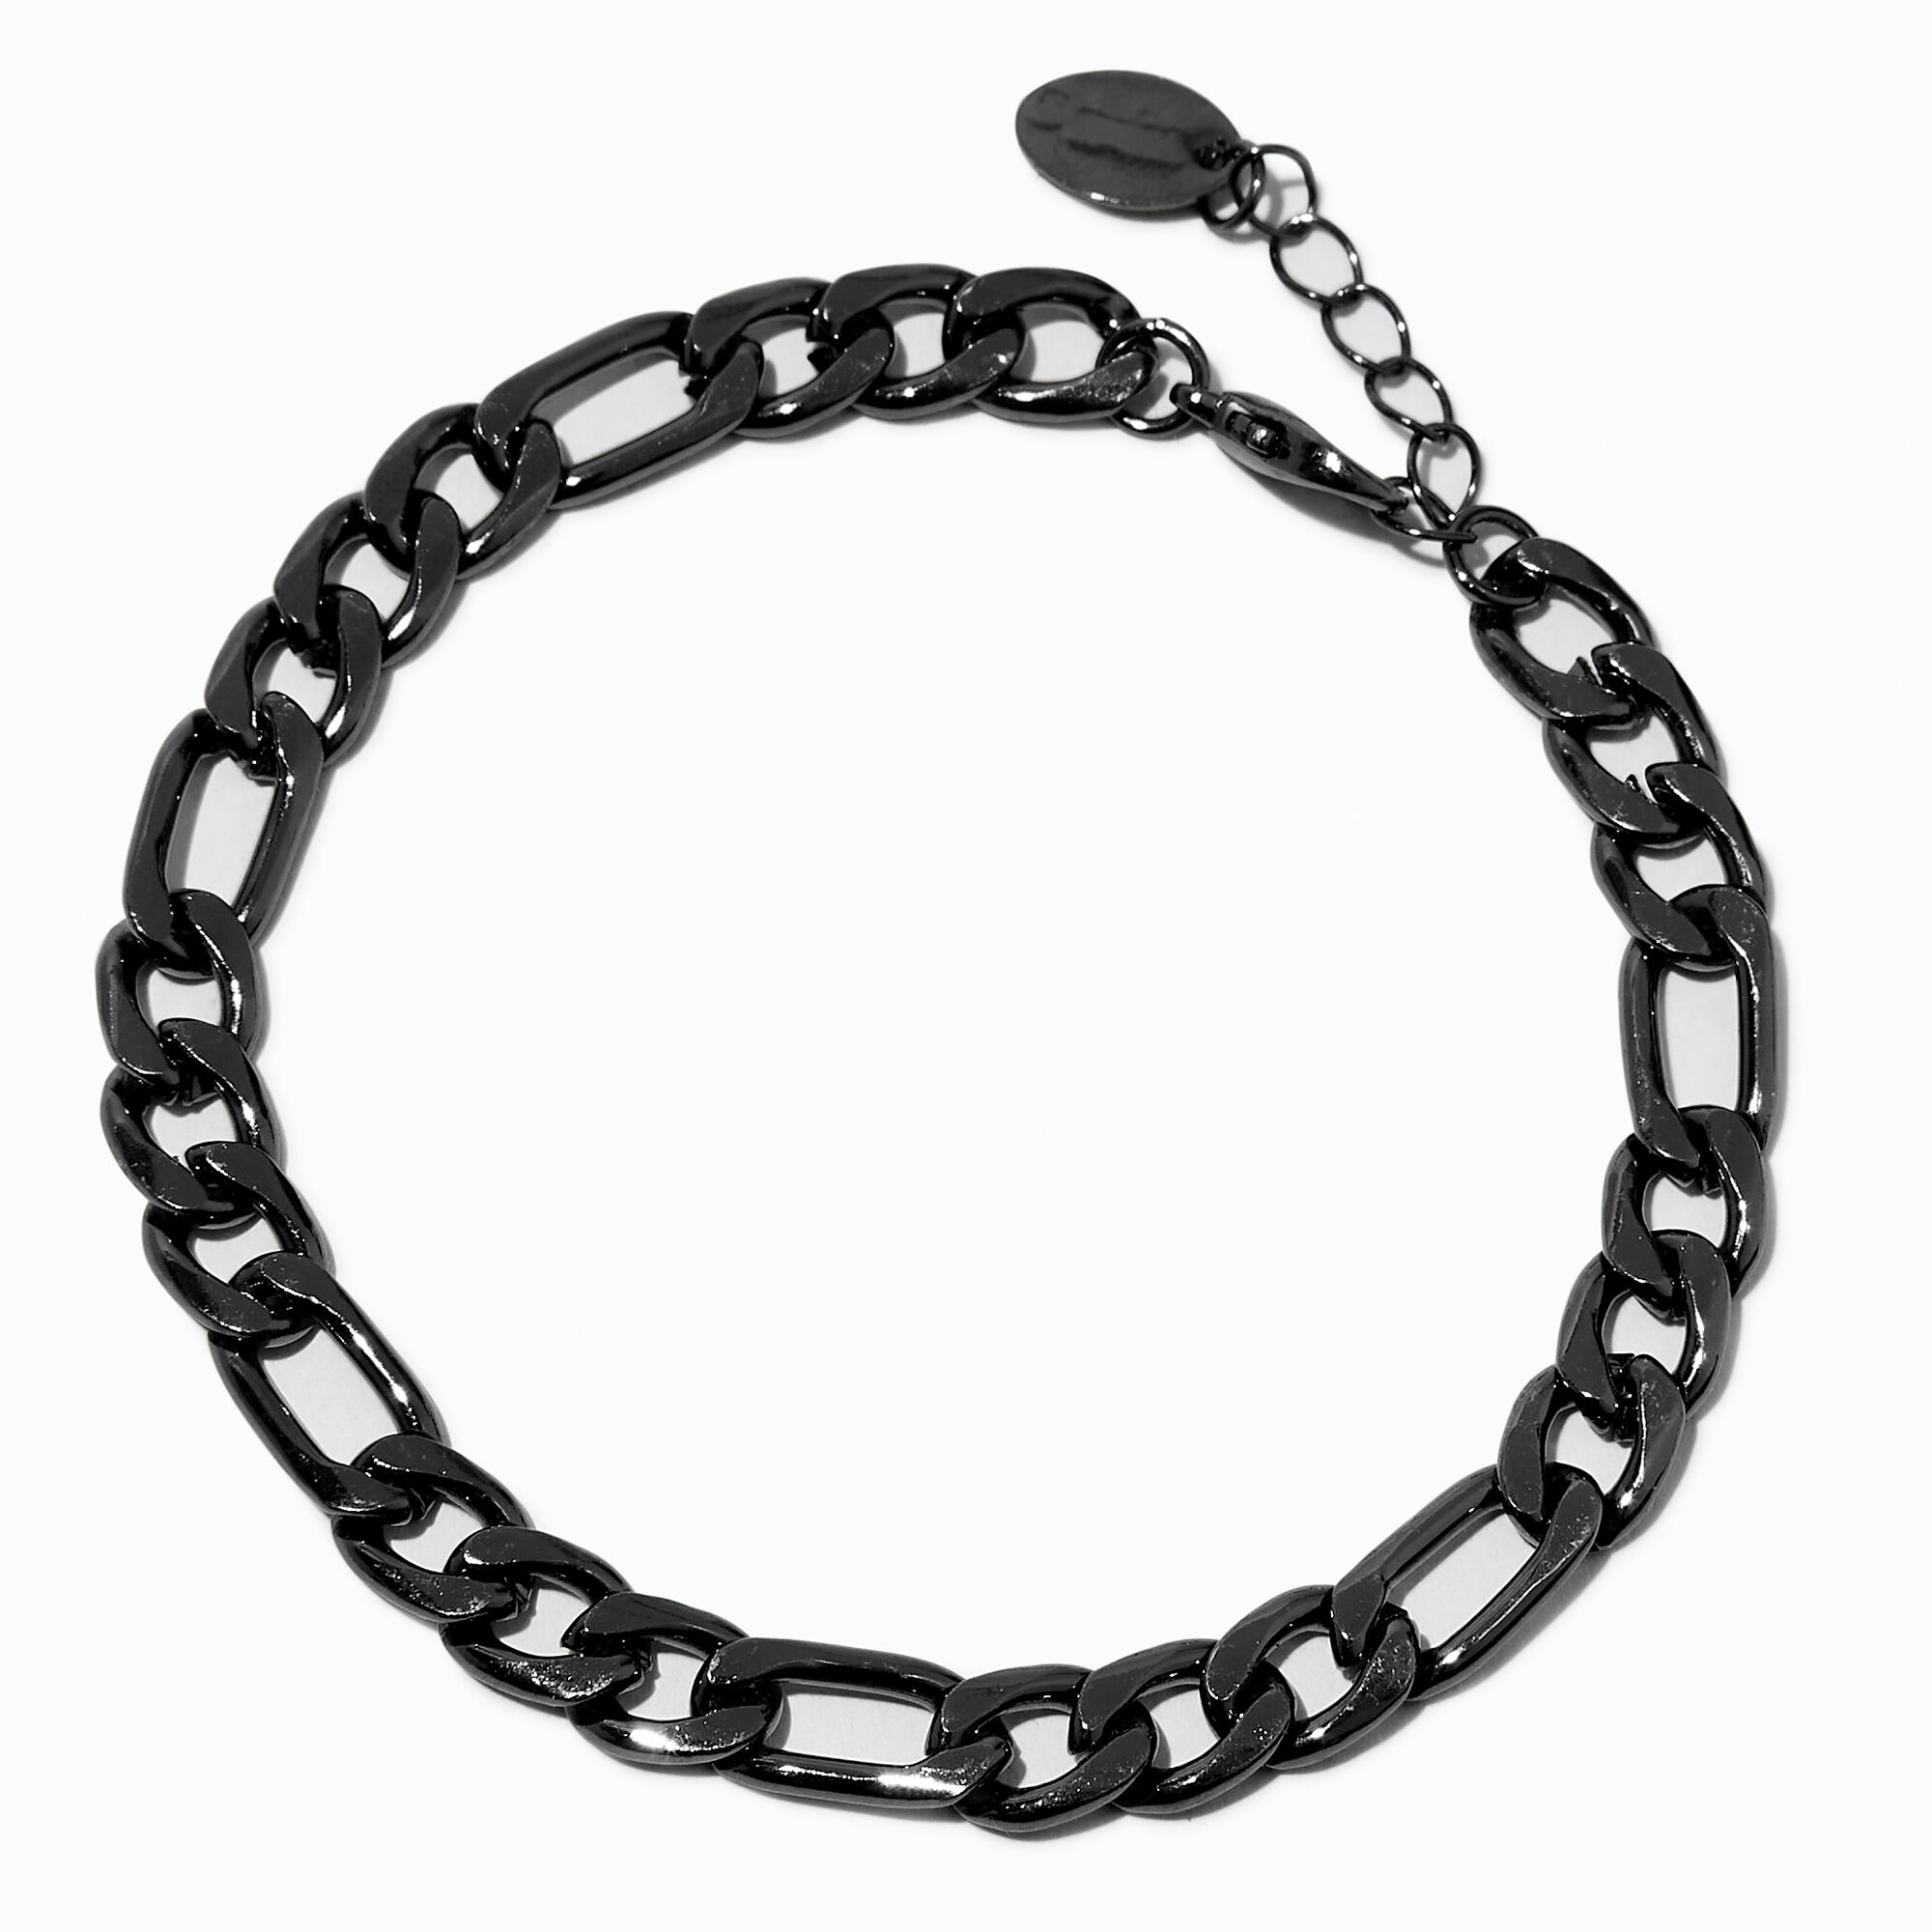 View Claires Hematite 5MM Figaro Chain Bracelet information